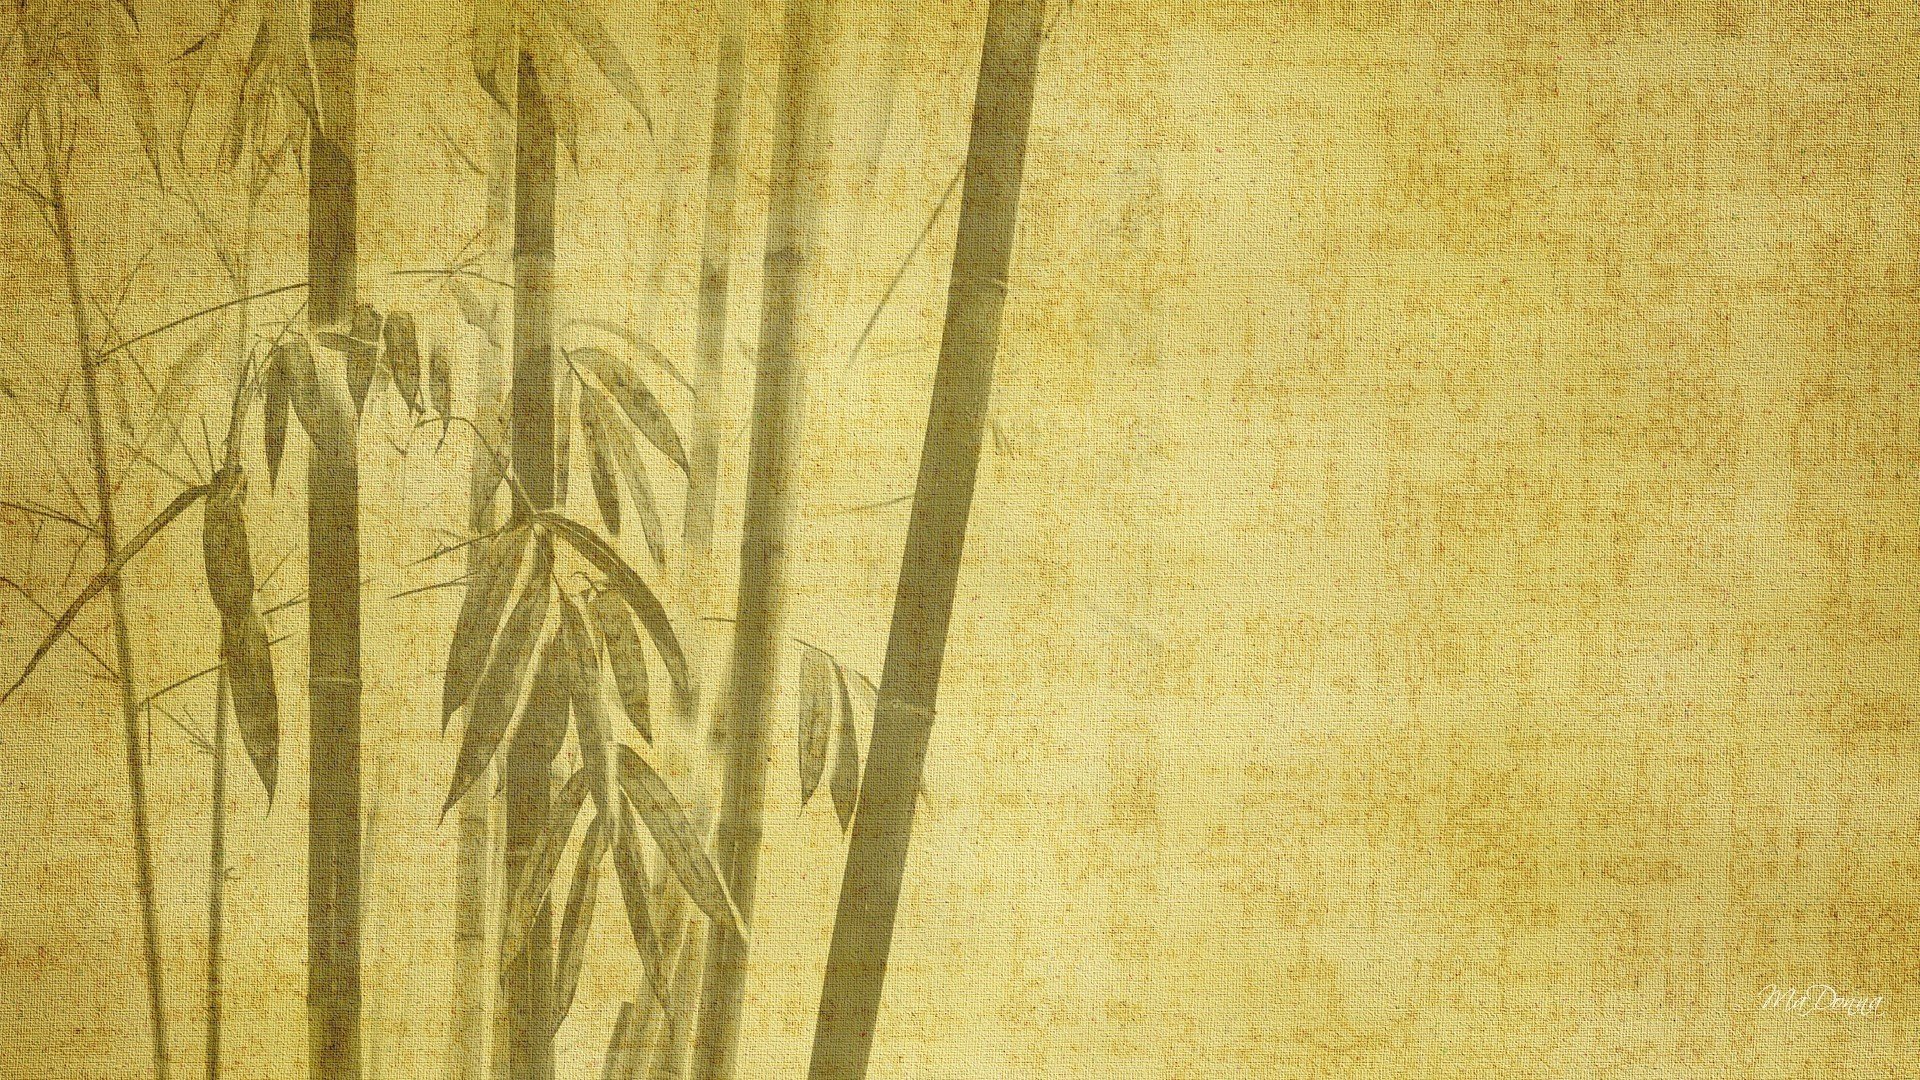  digital art oriental drawings backgrounds simple wallpaper background